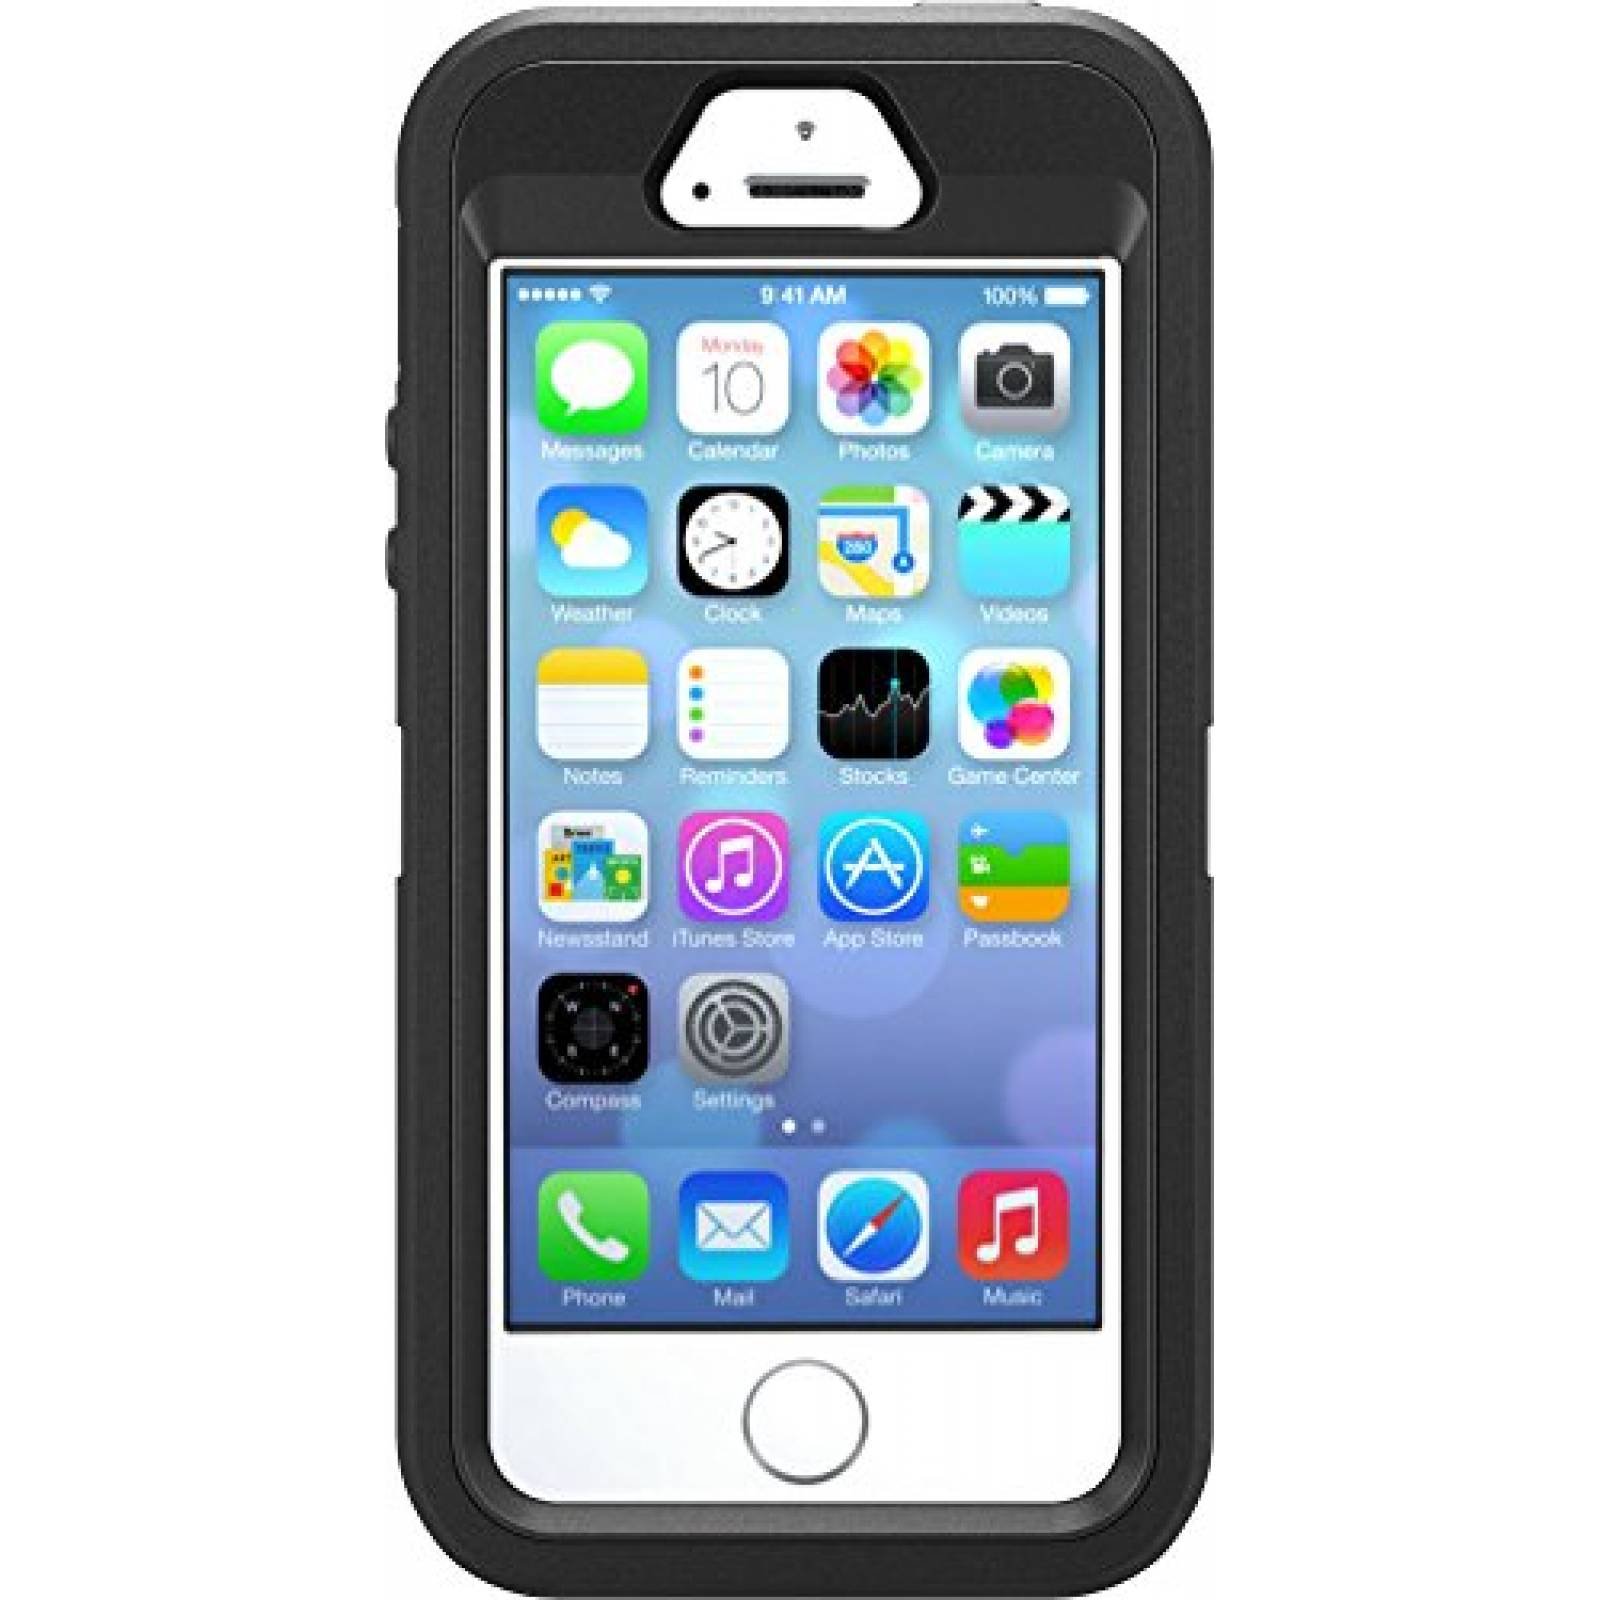 Funda OtterBox DEFENDER SERIES Case for iPhone 5/5s/SE - EE TITANS)